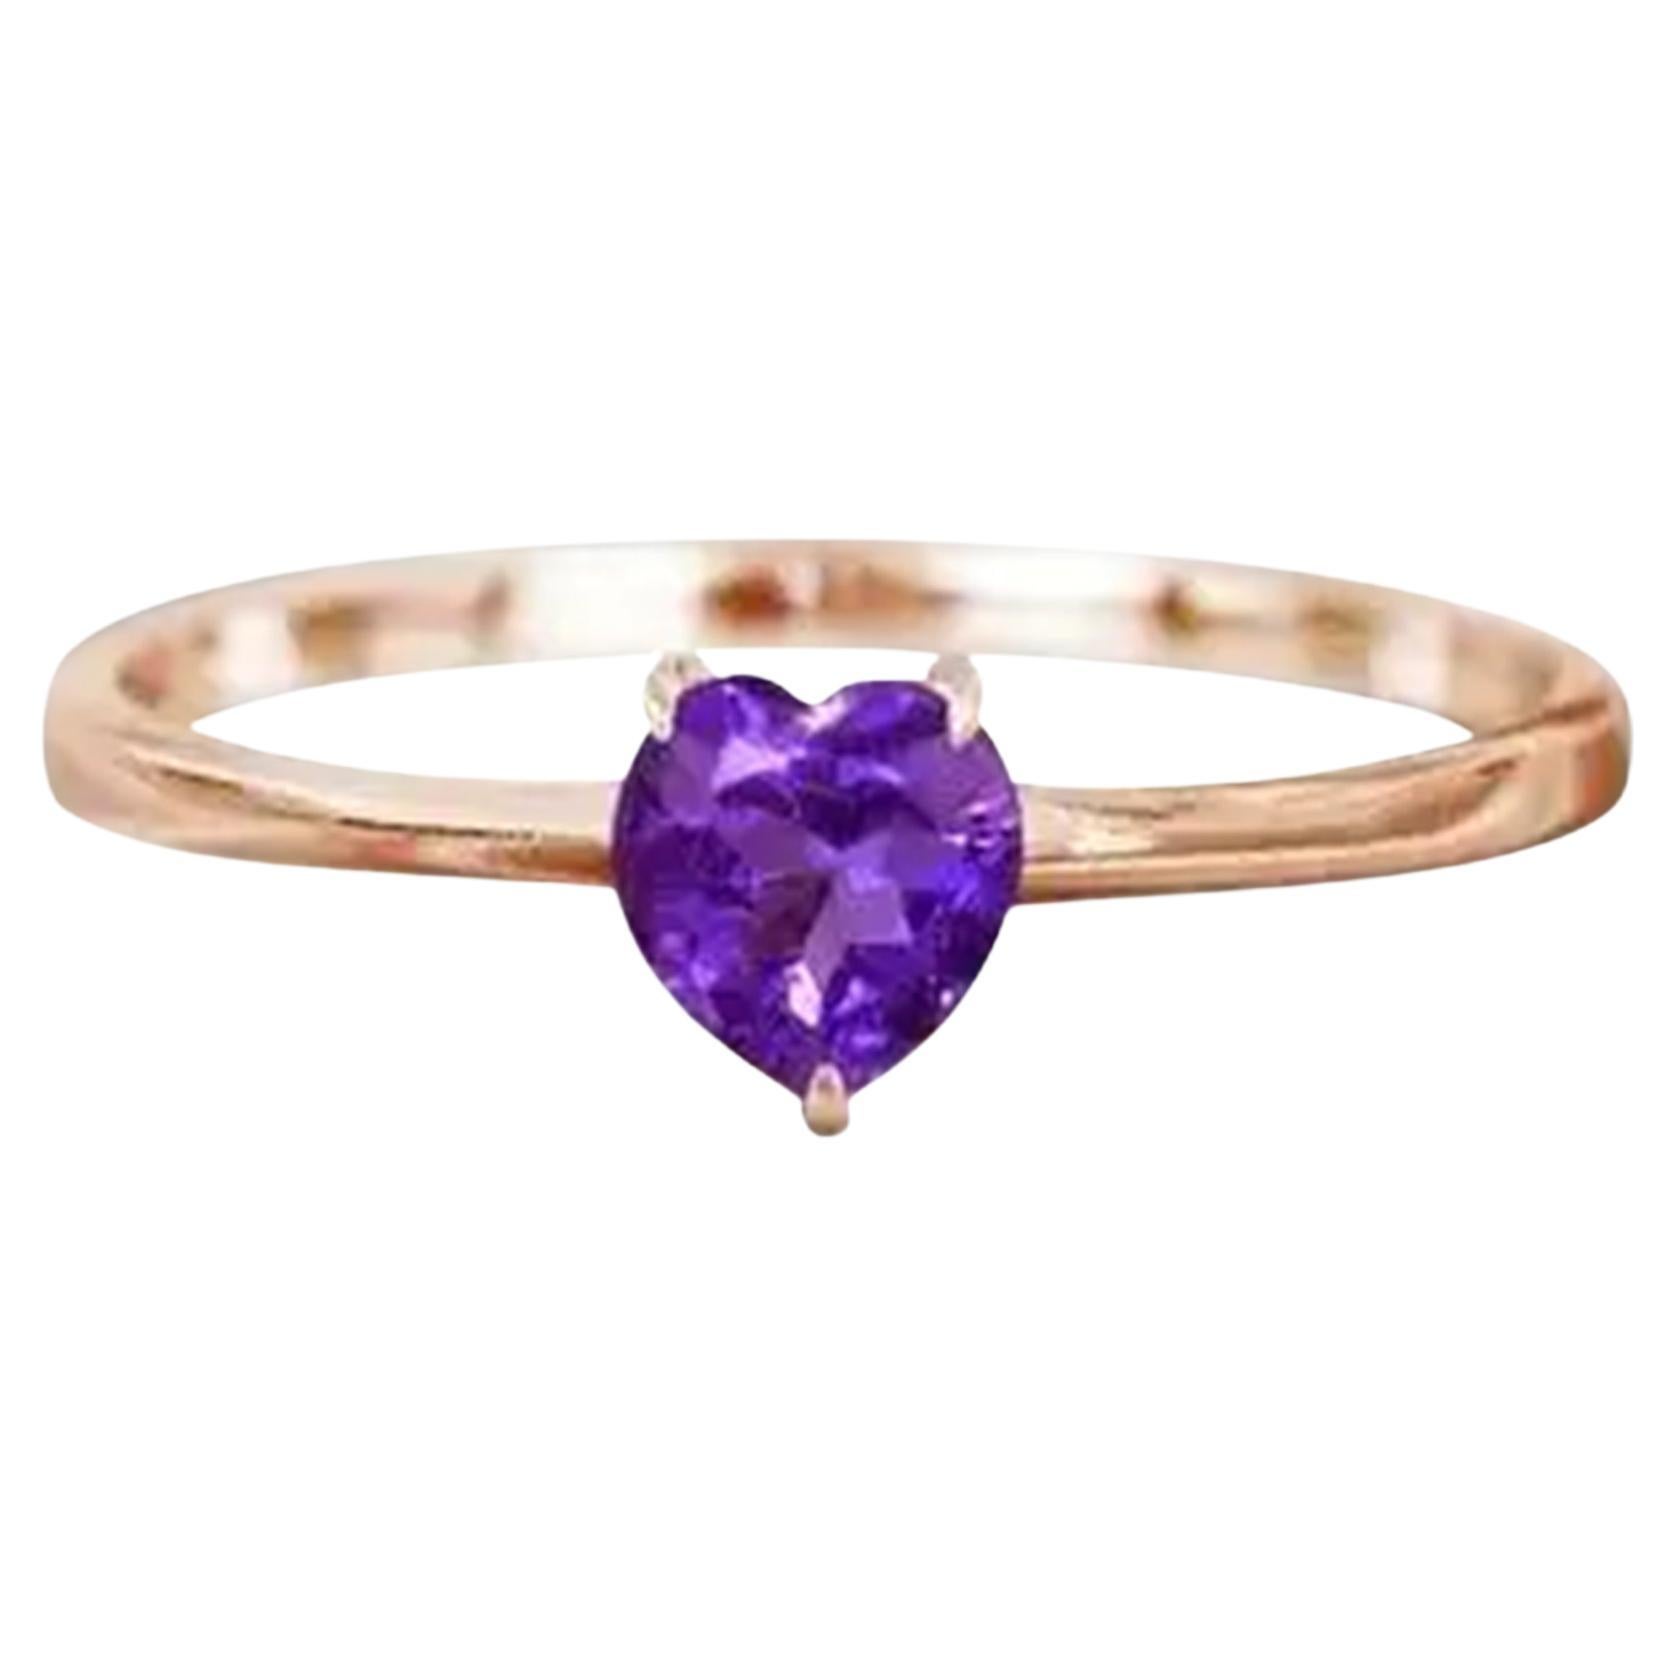 For Sale:  10k Gold Heart Gemstone 5x5 mm Heart Gemstone Ring Gemstone Engagement Ring